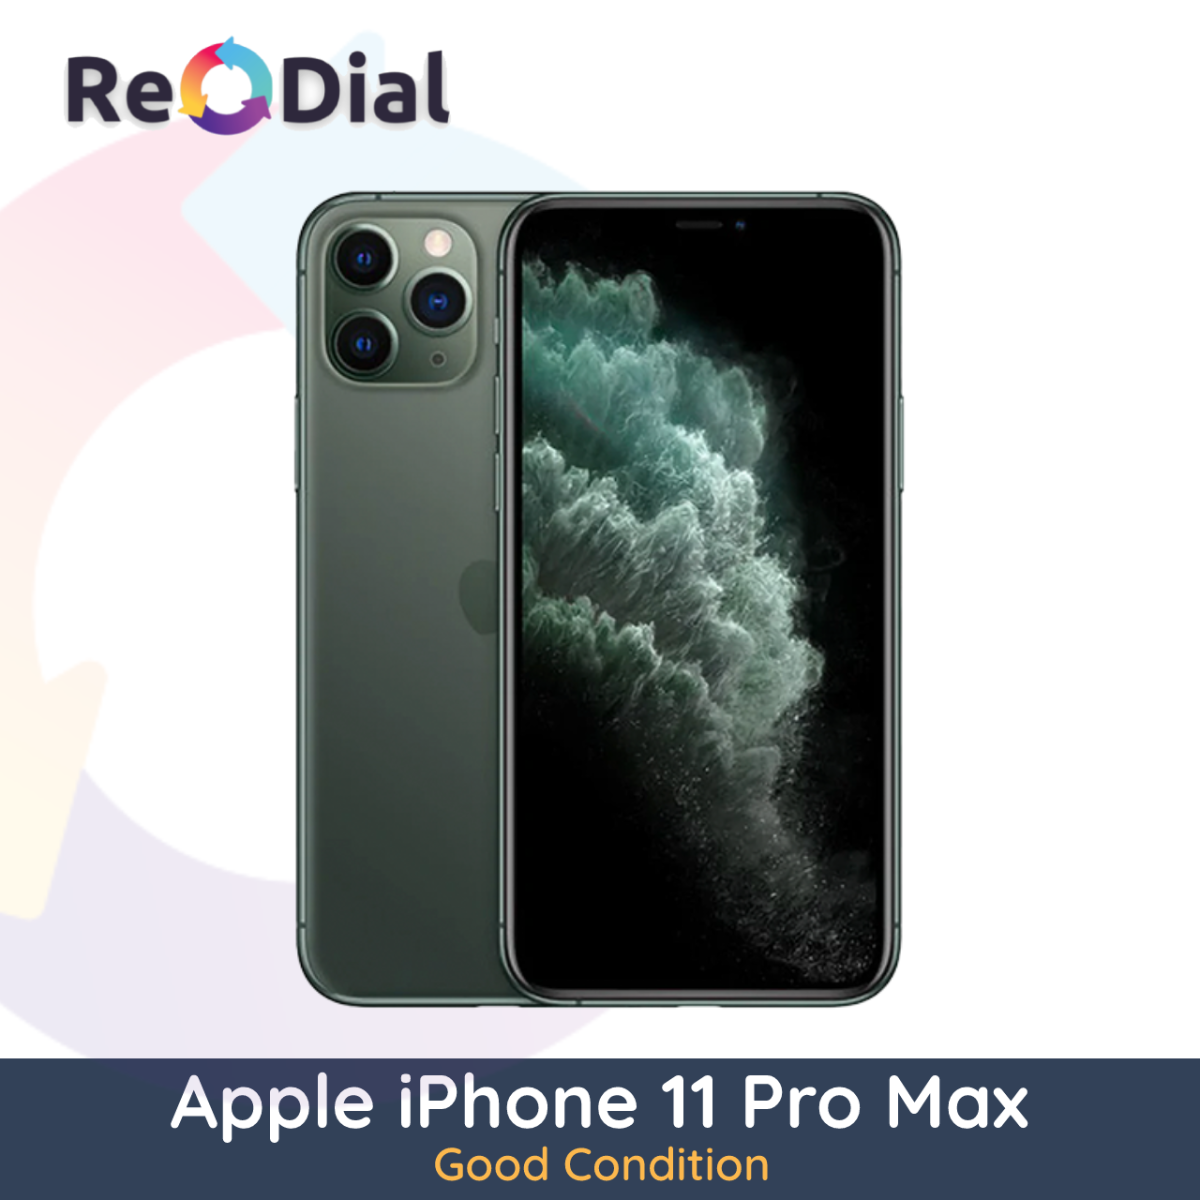 Apple iPhone 11 Pro Max - Good Condition